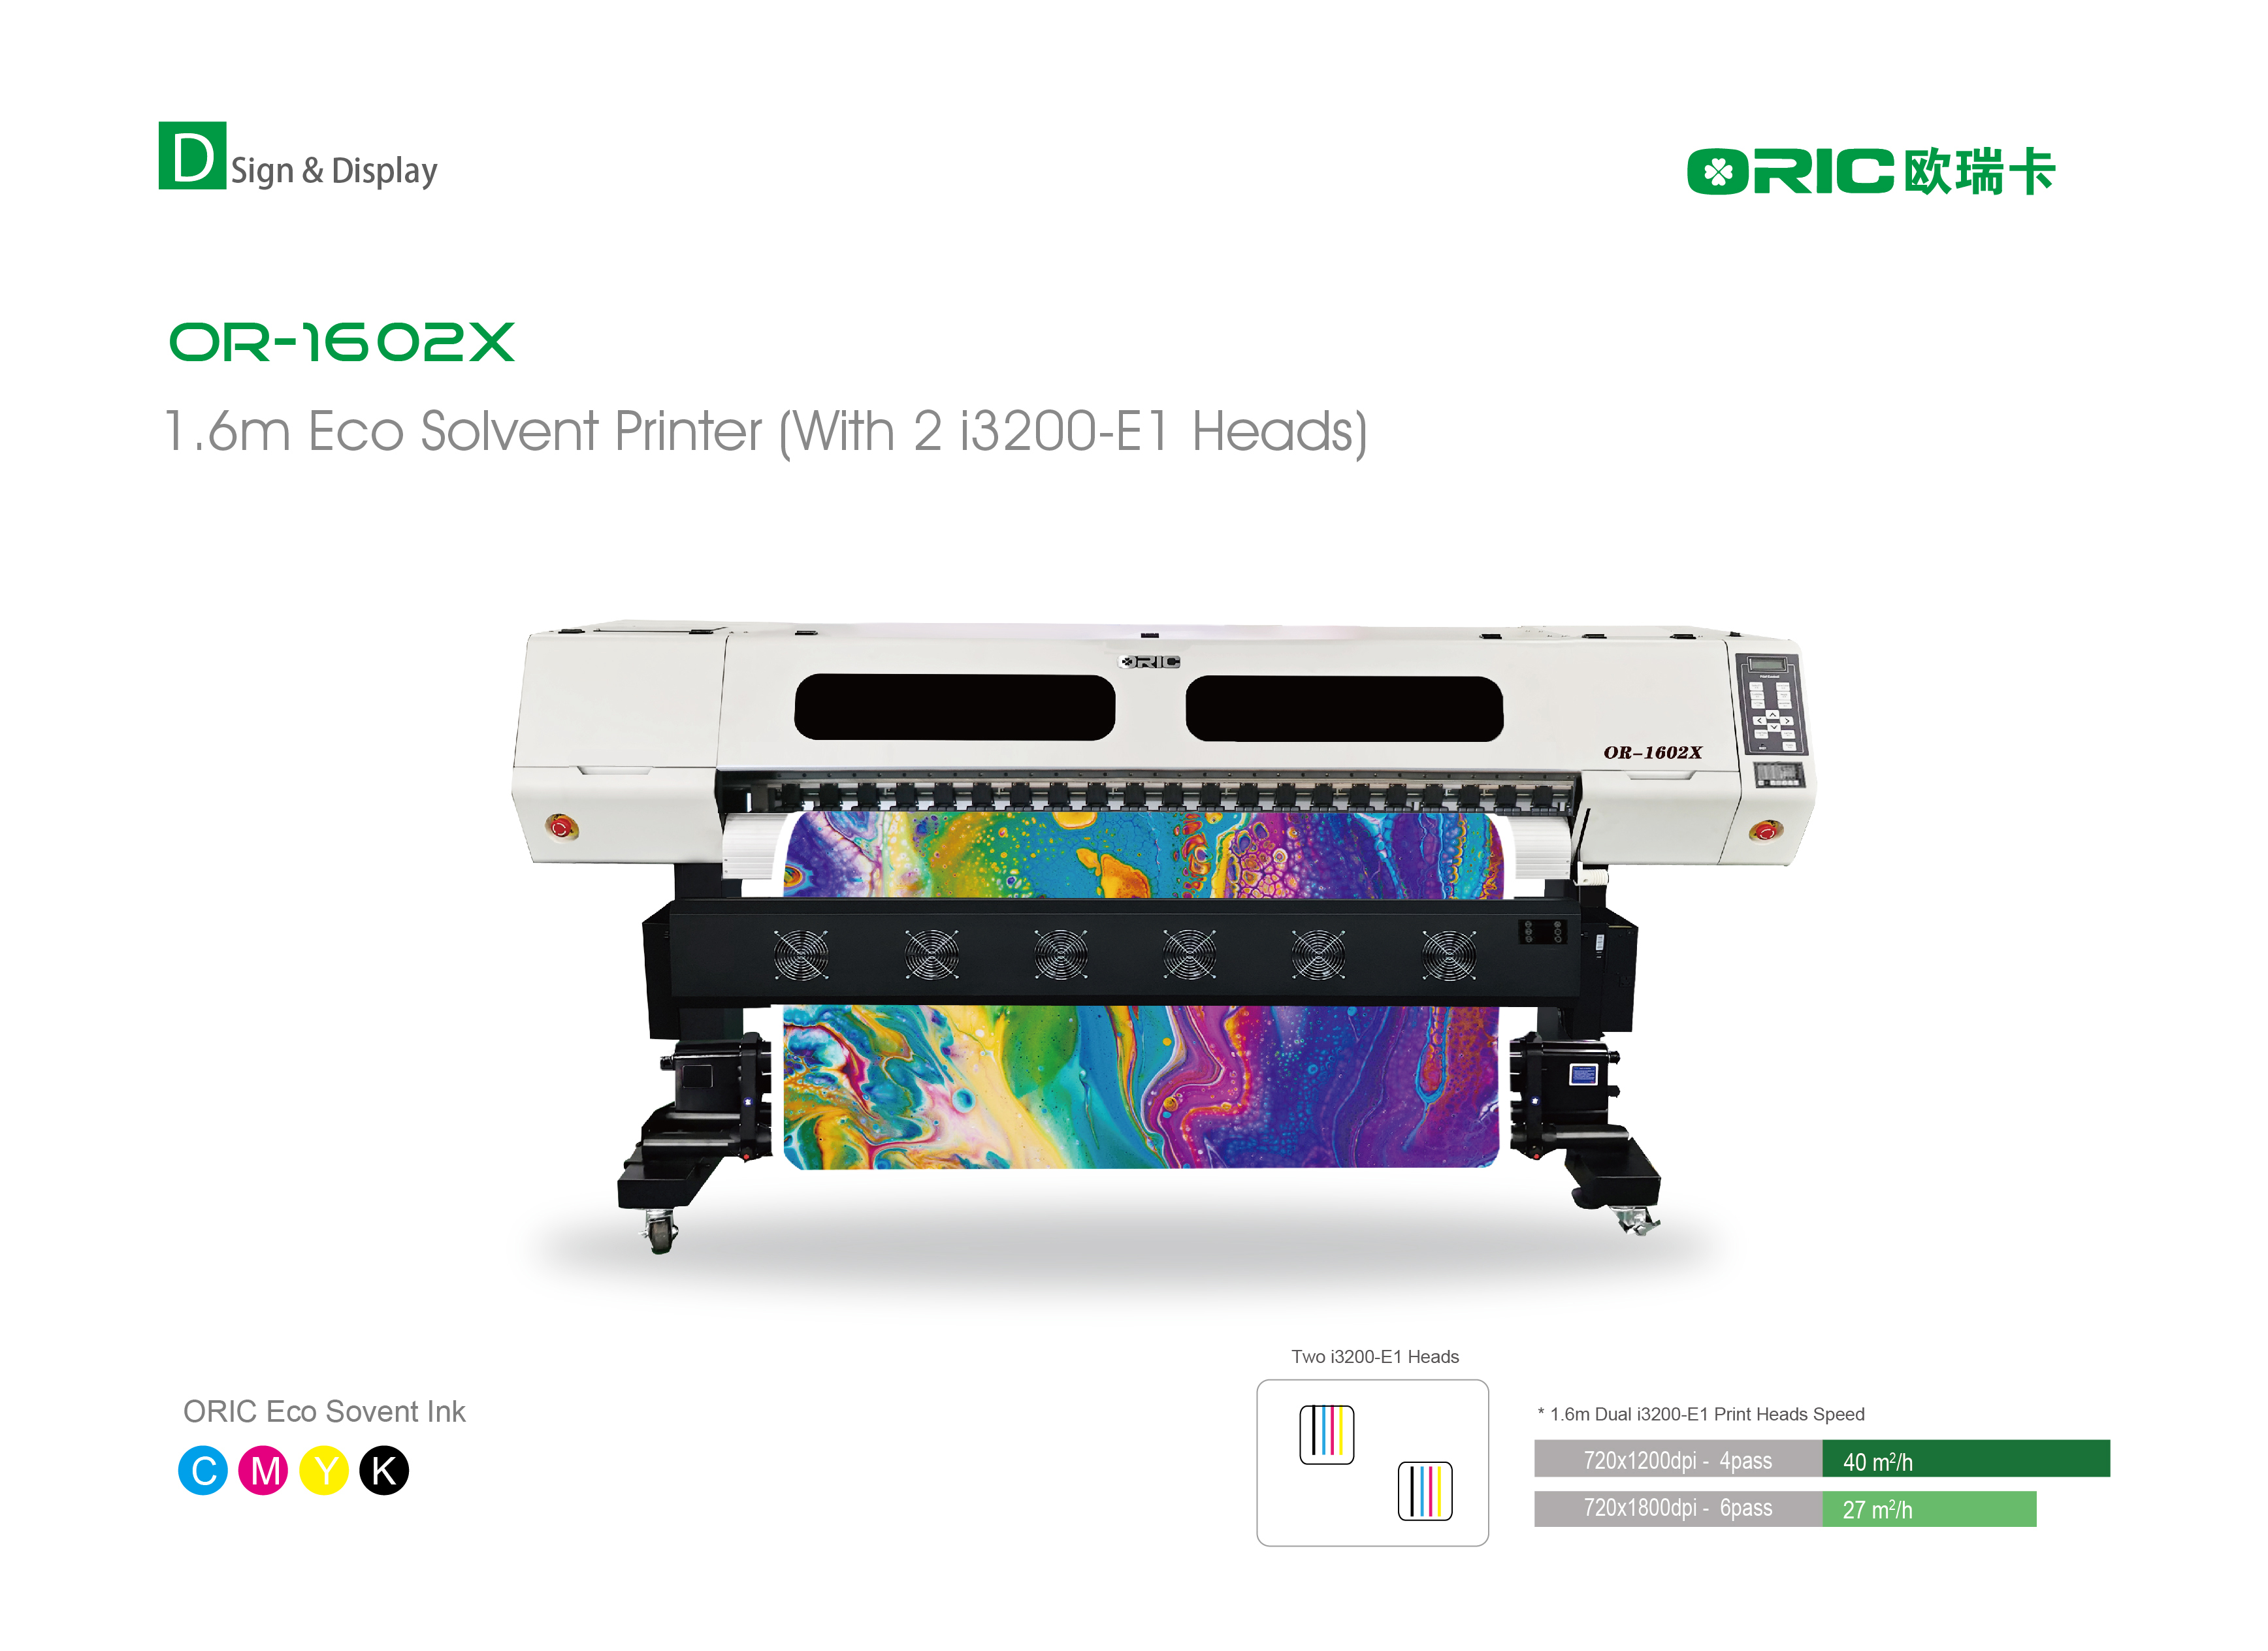 OR-1602X eco solvent printer (1)